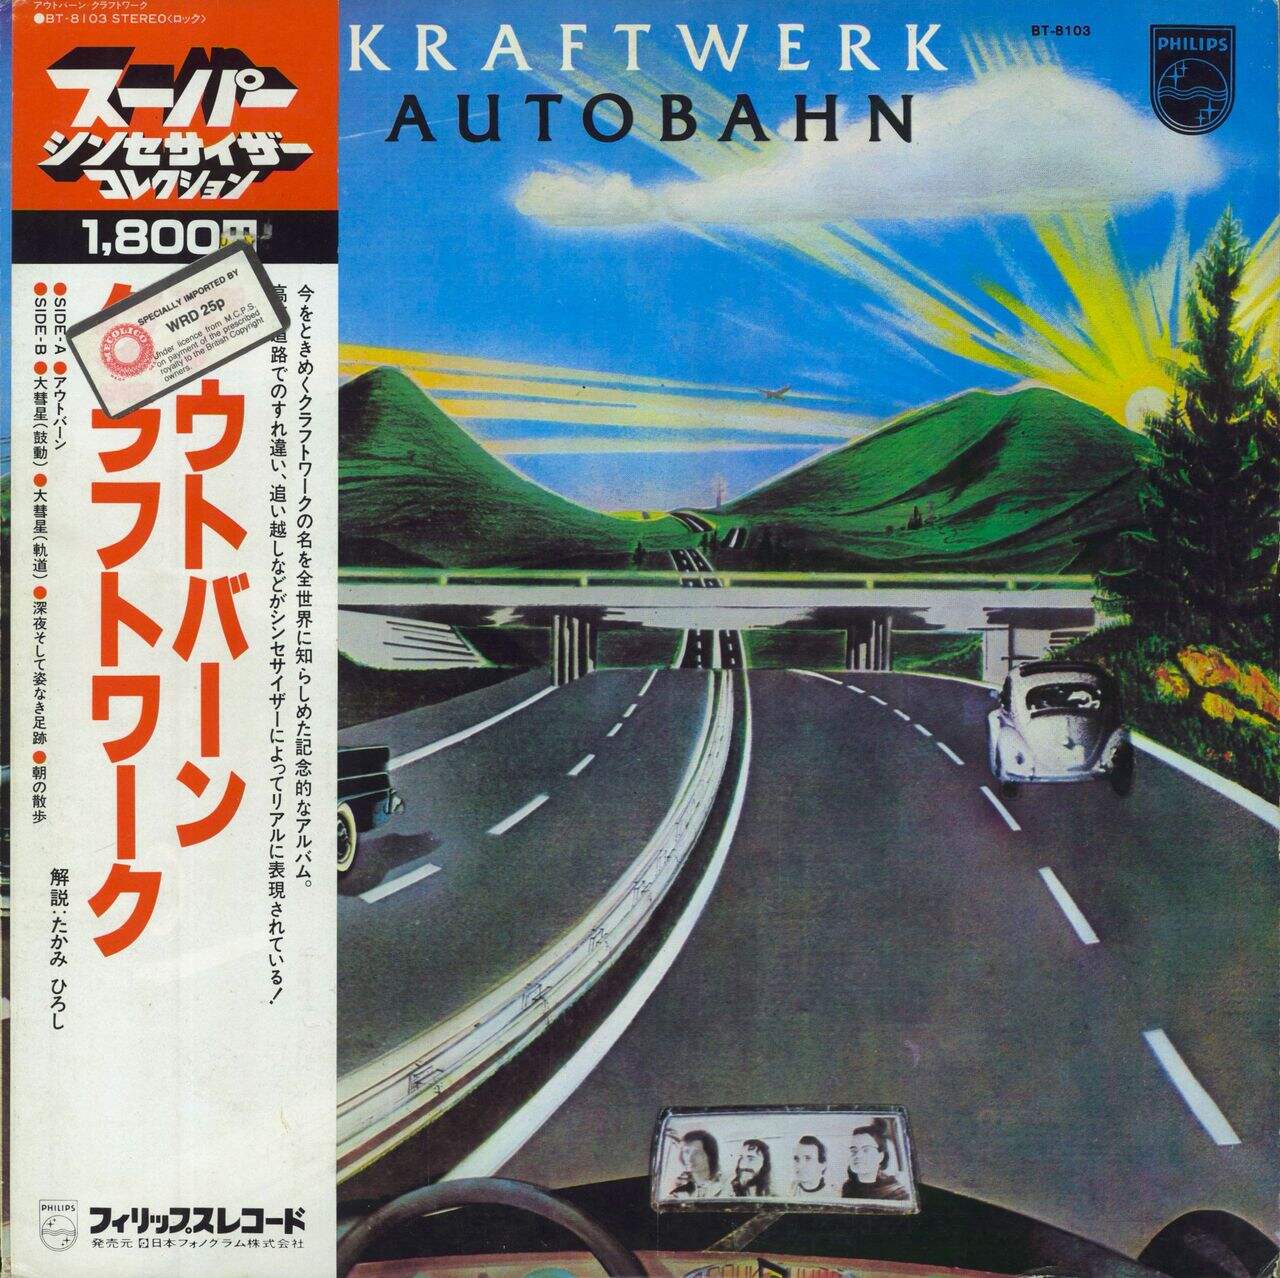 Kraftwerk Autobahn + Obi Japanese Vinyl LP